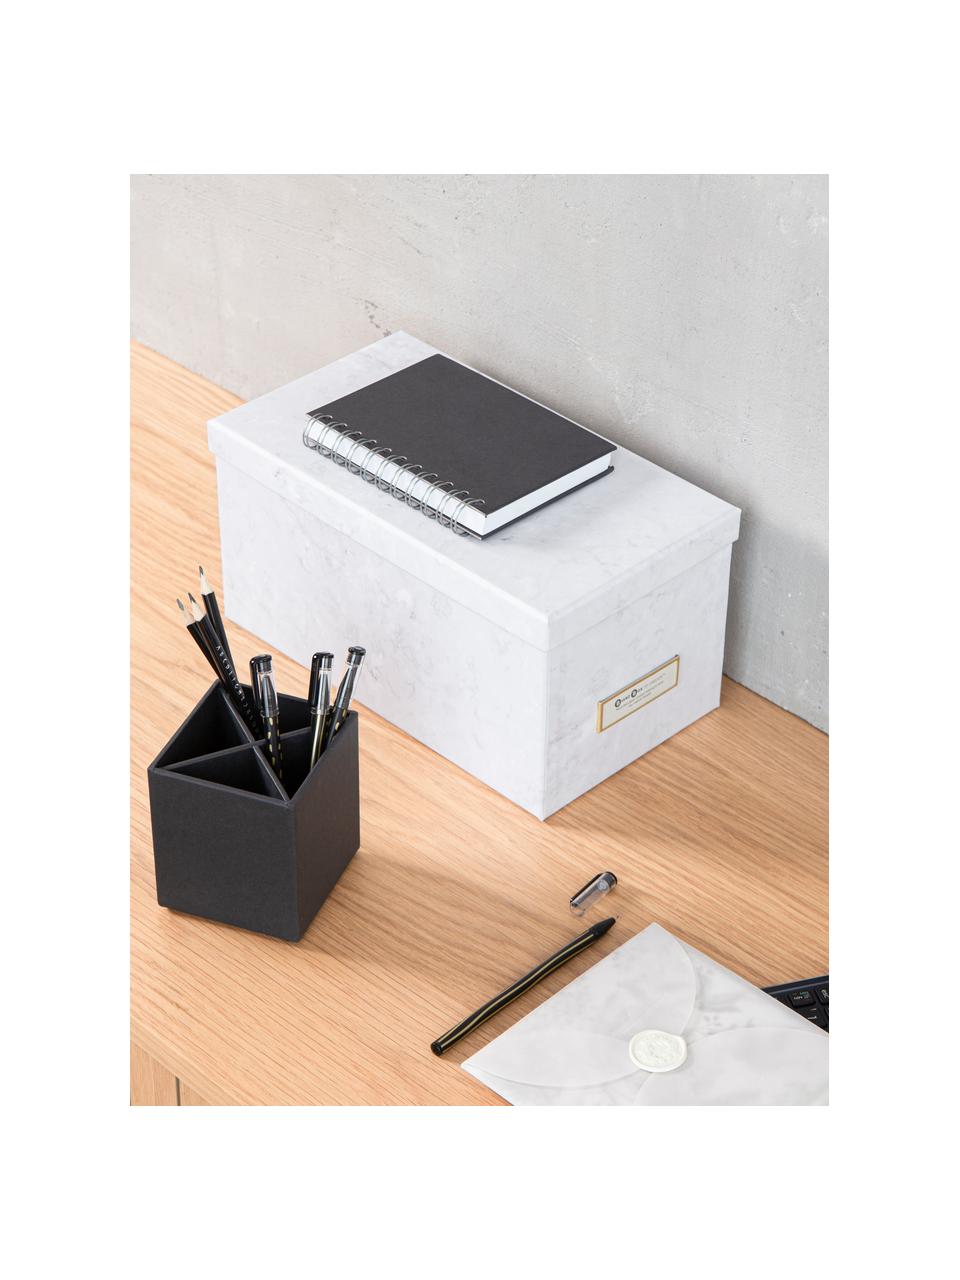 Aufbewahrungsbox Silvia, 2 Stück, Box: fester, laminierter Karto, Weiss, marmoriert, B 17 x H 15 cm